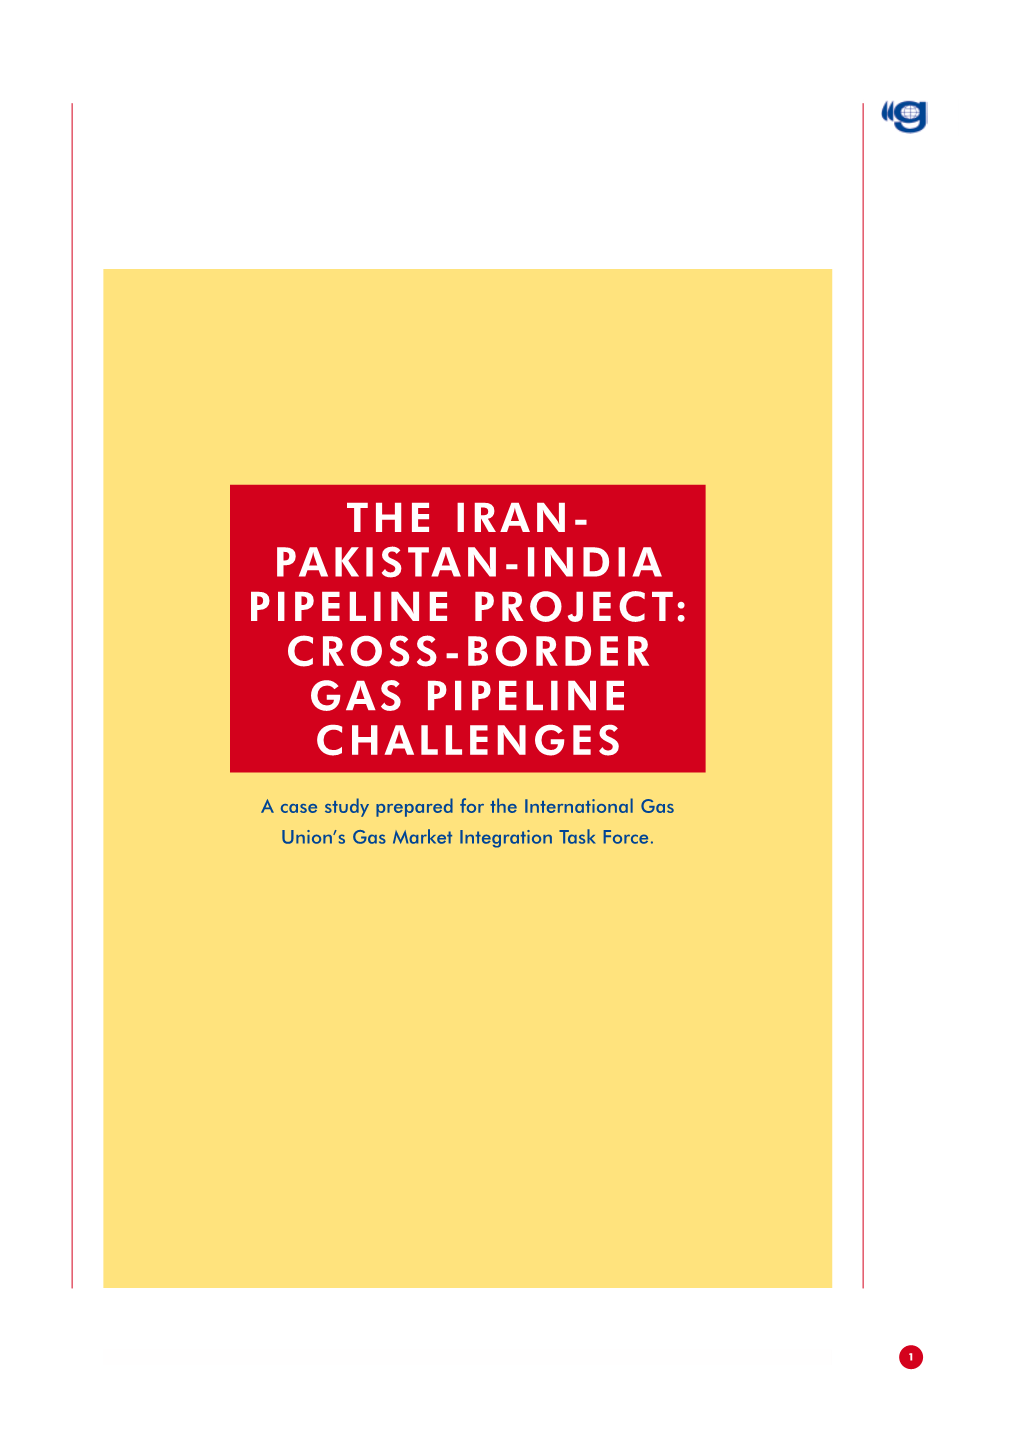 The Iran- Pakistan-India Pipeline Project: Cross-Border Gas